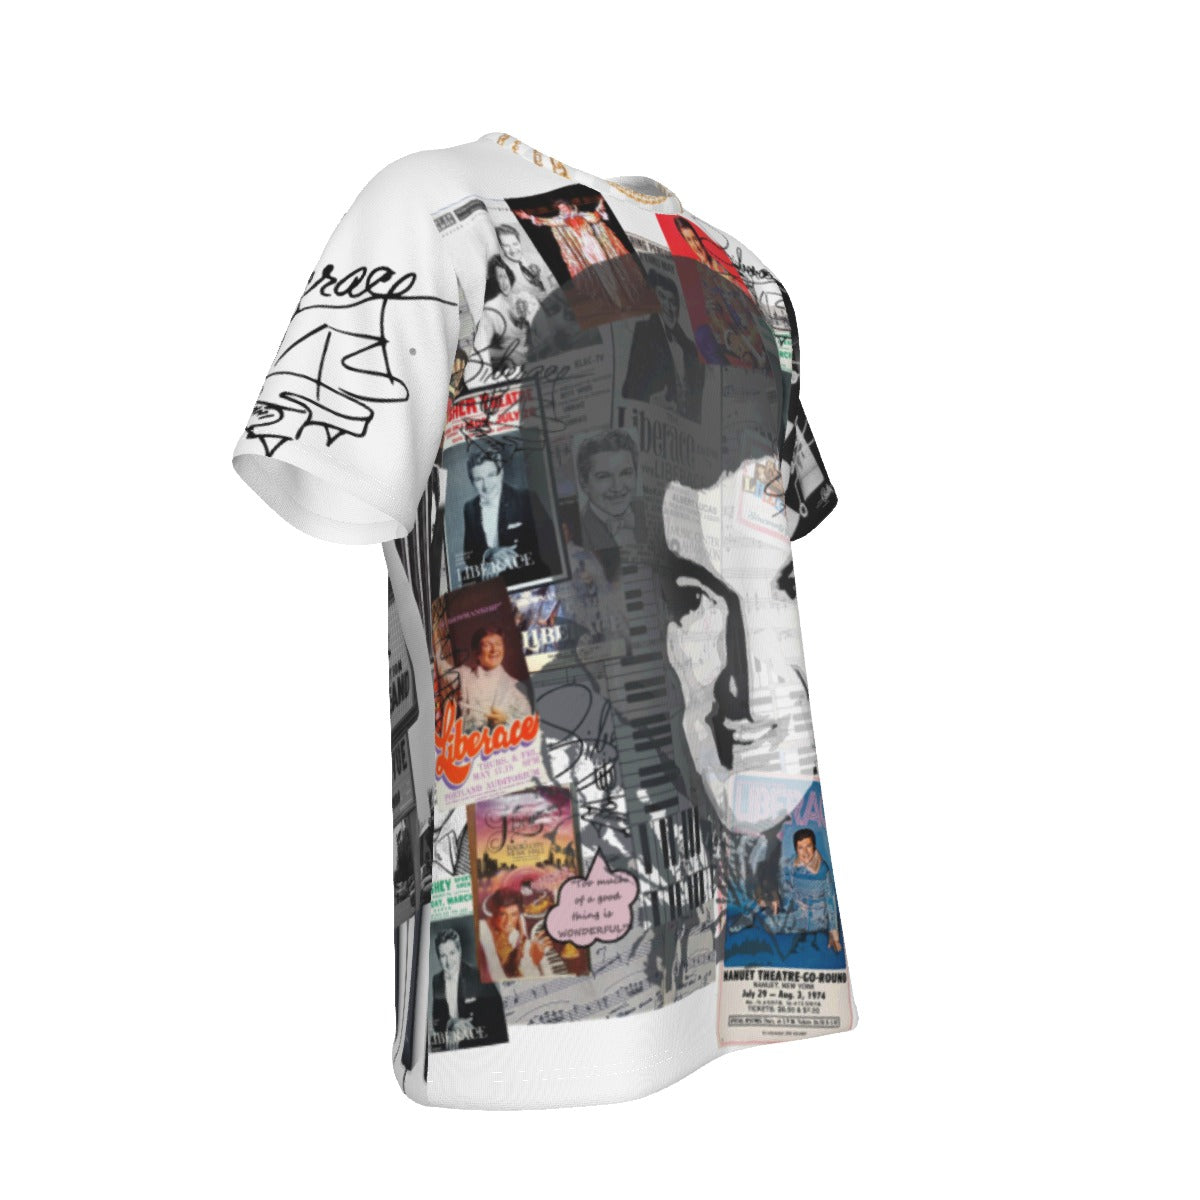 Liberace Collage Men's T-shirt